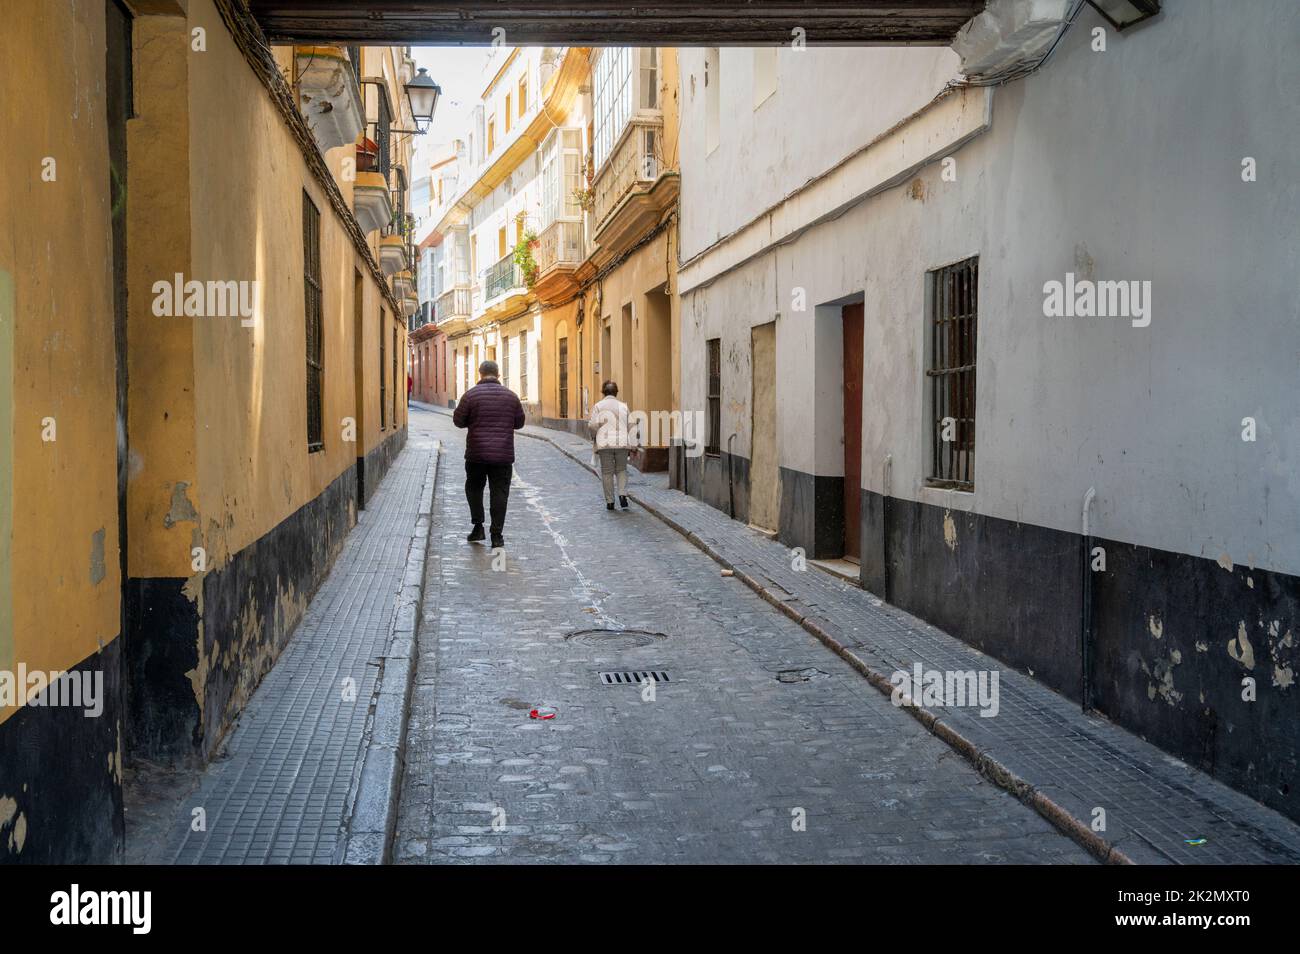 Two people walking down an old narrow street in Cadiz Spain Stock Photo